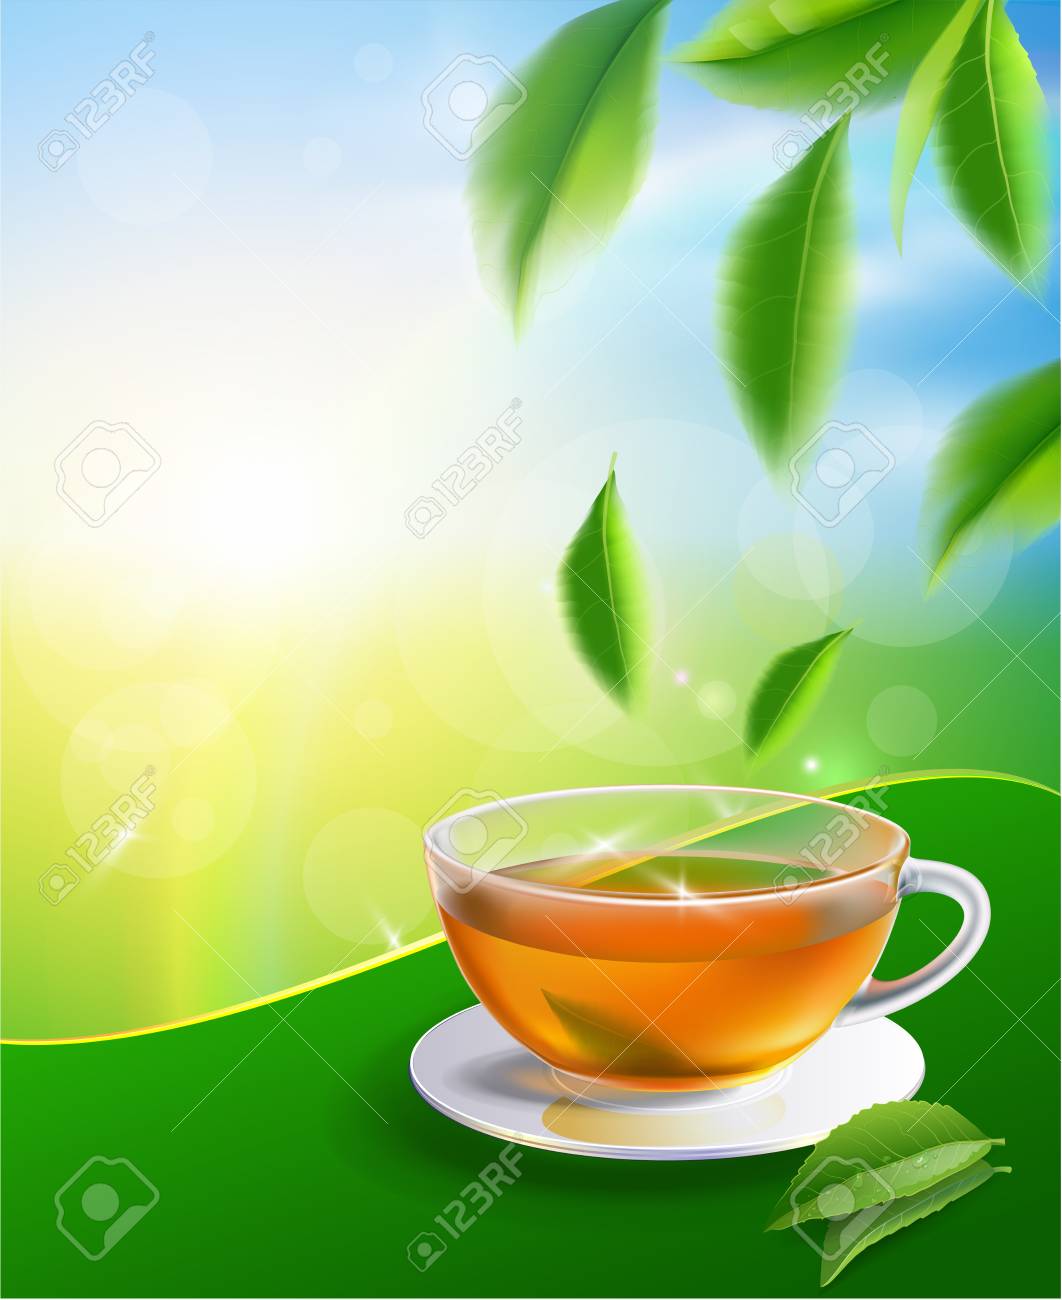 19+] Tea Background - WallpaperSafari